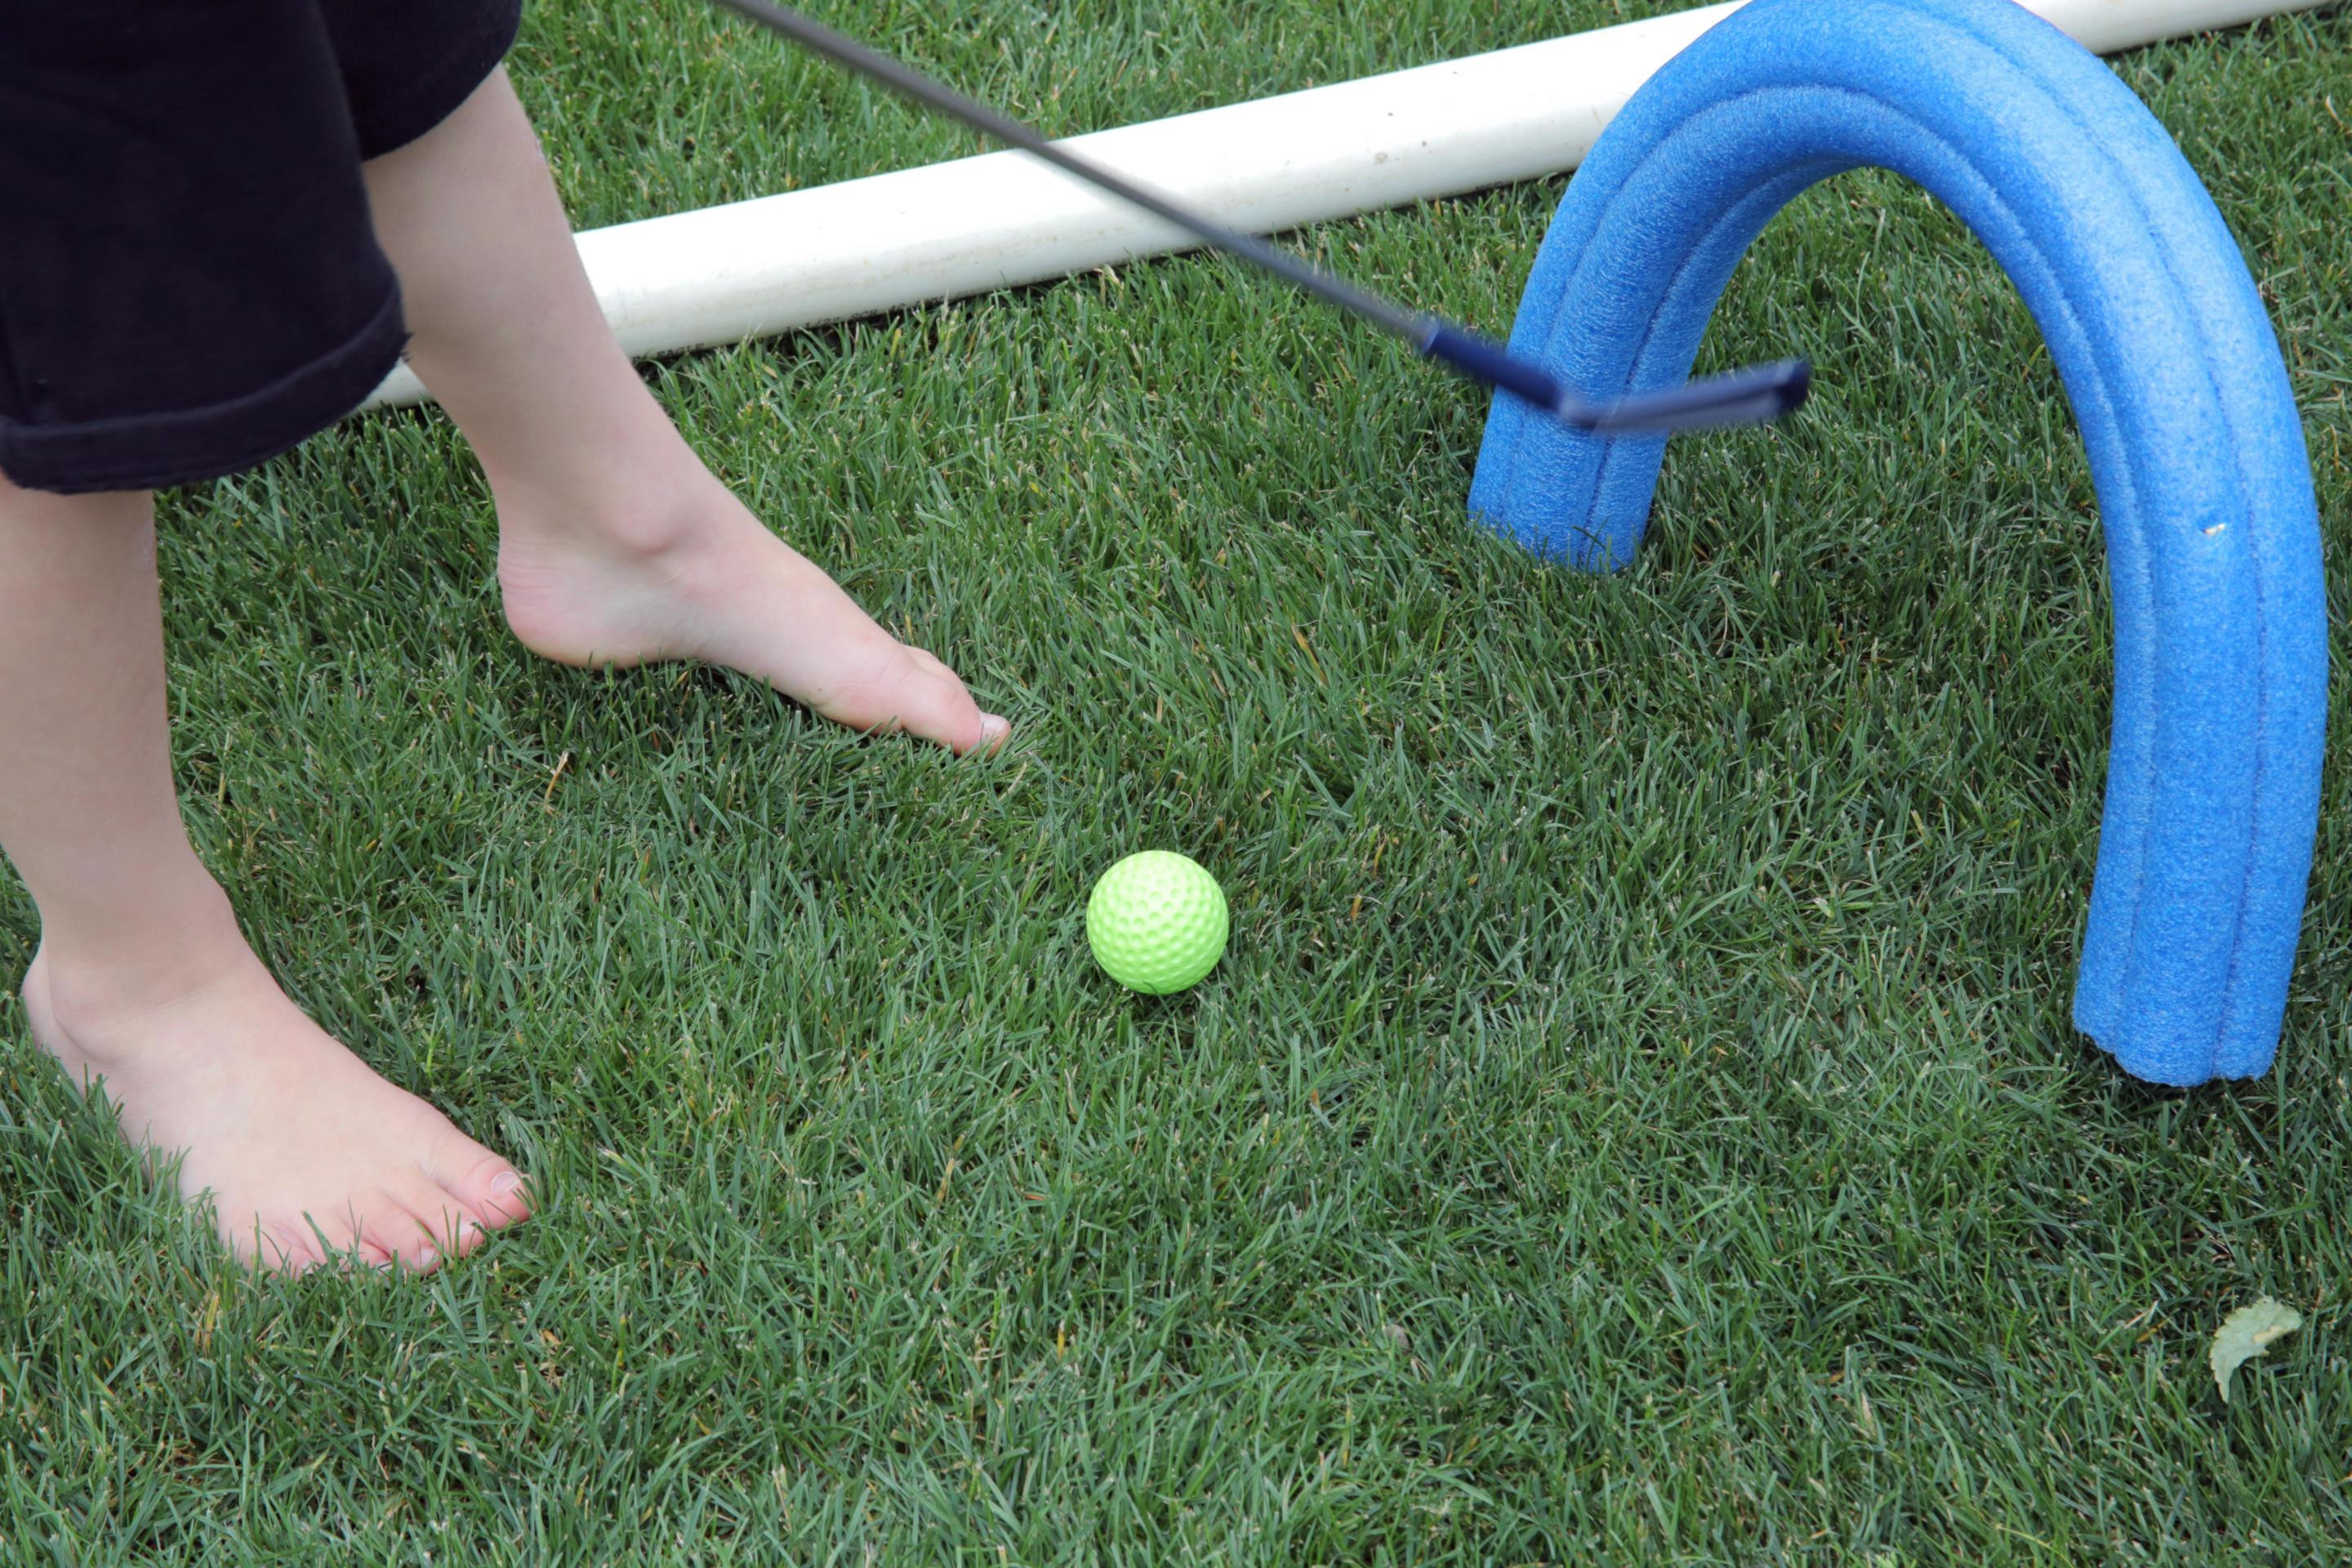 Best ideas about DIY Mini Golf
. Save or Pin Outdoor Fun Backyard Mini Golf Course · Kix Cereal Now.